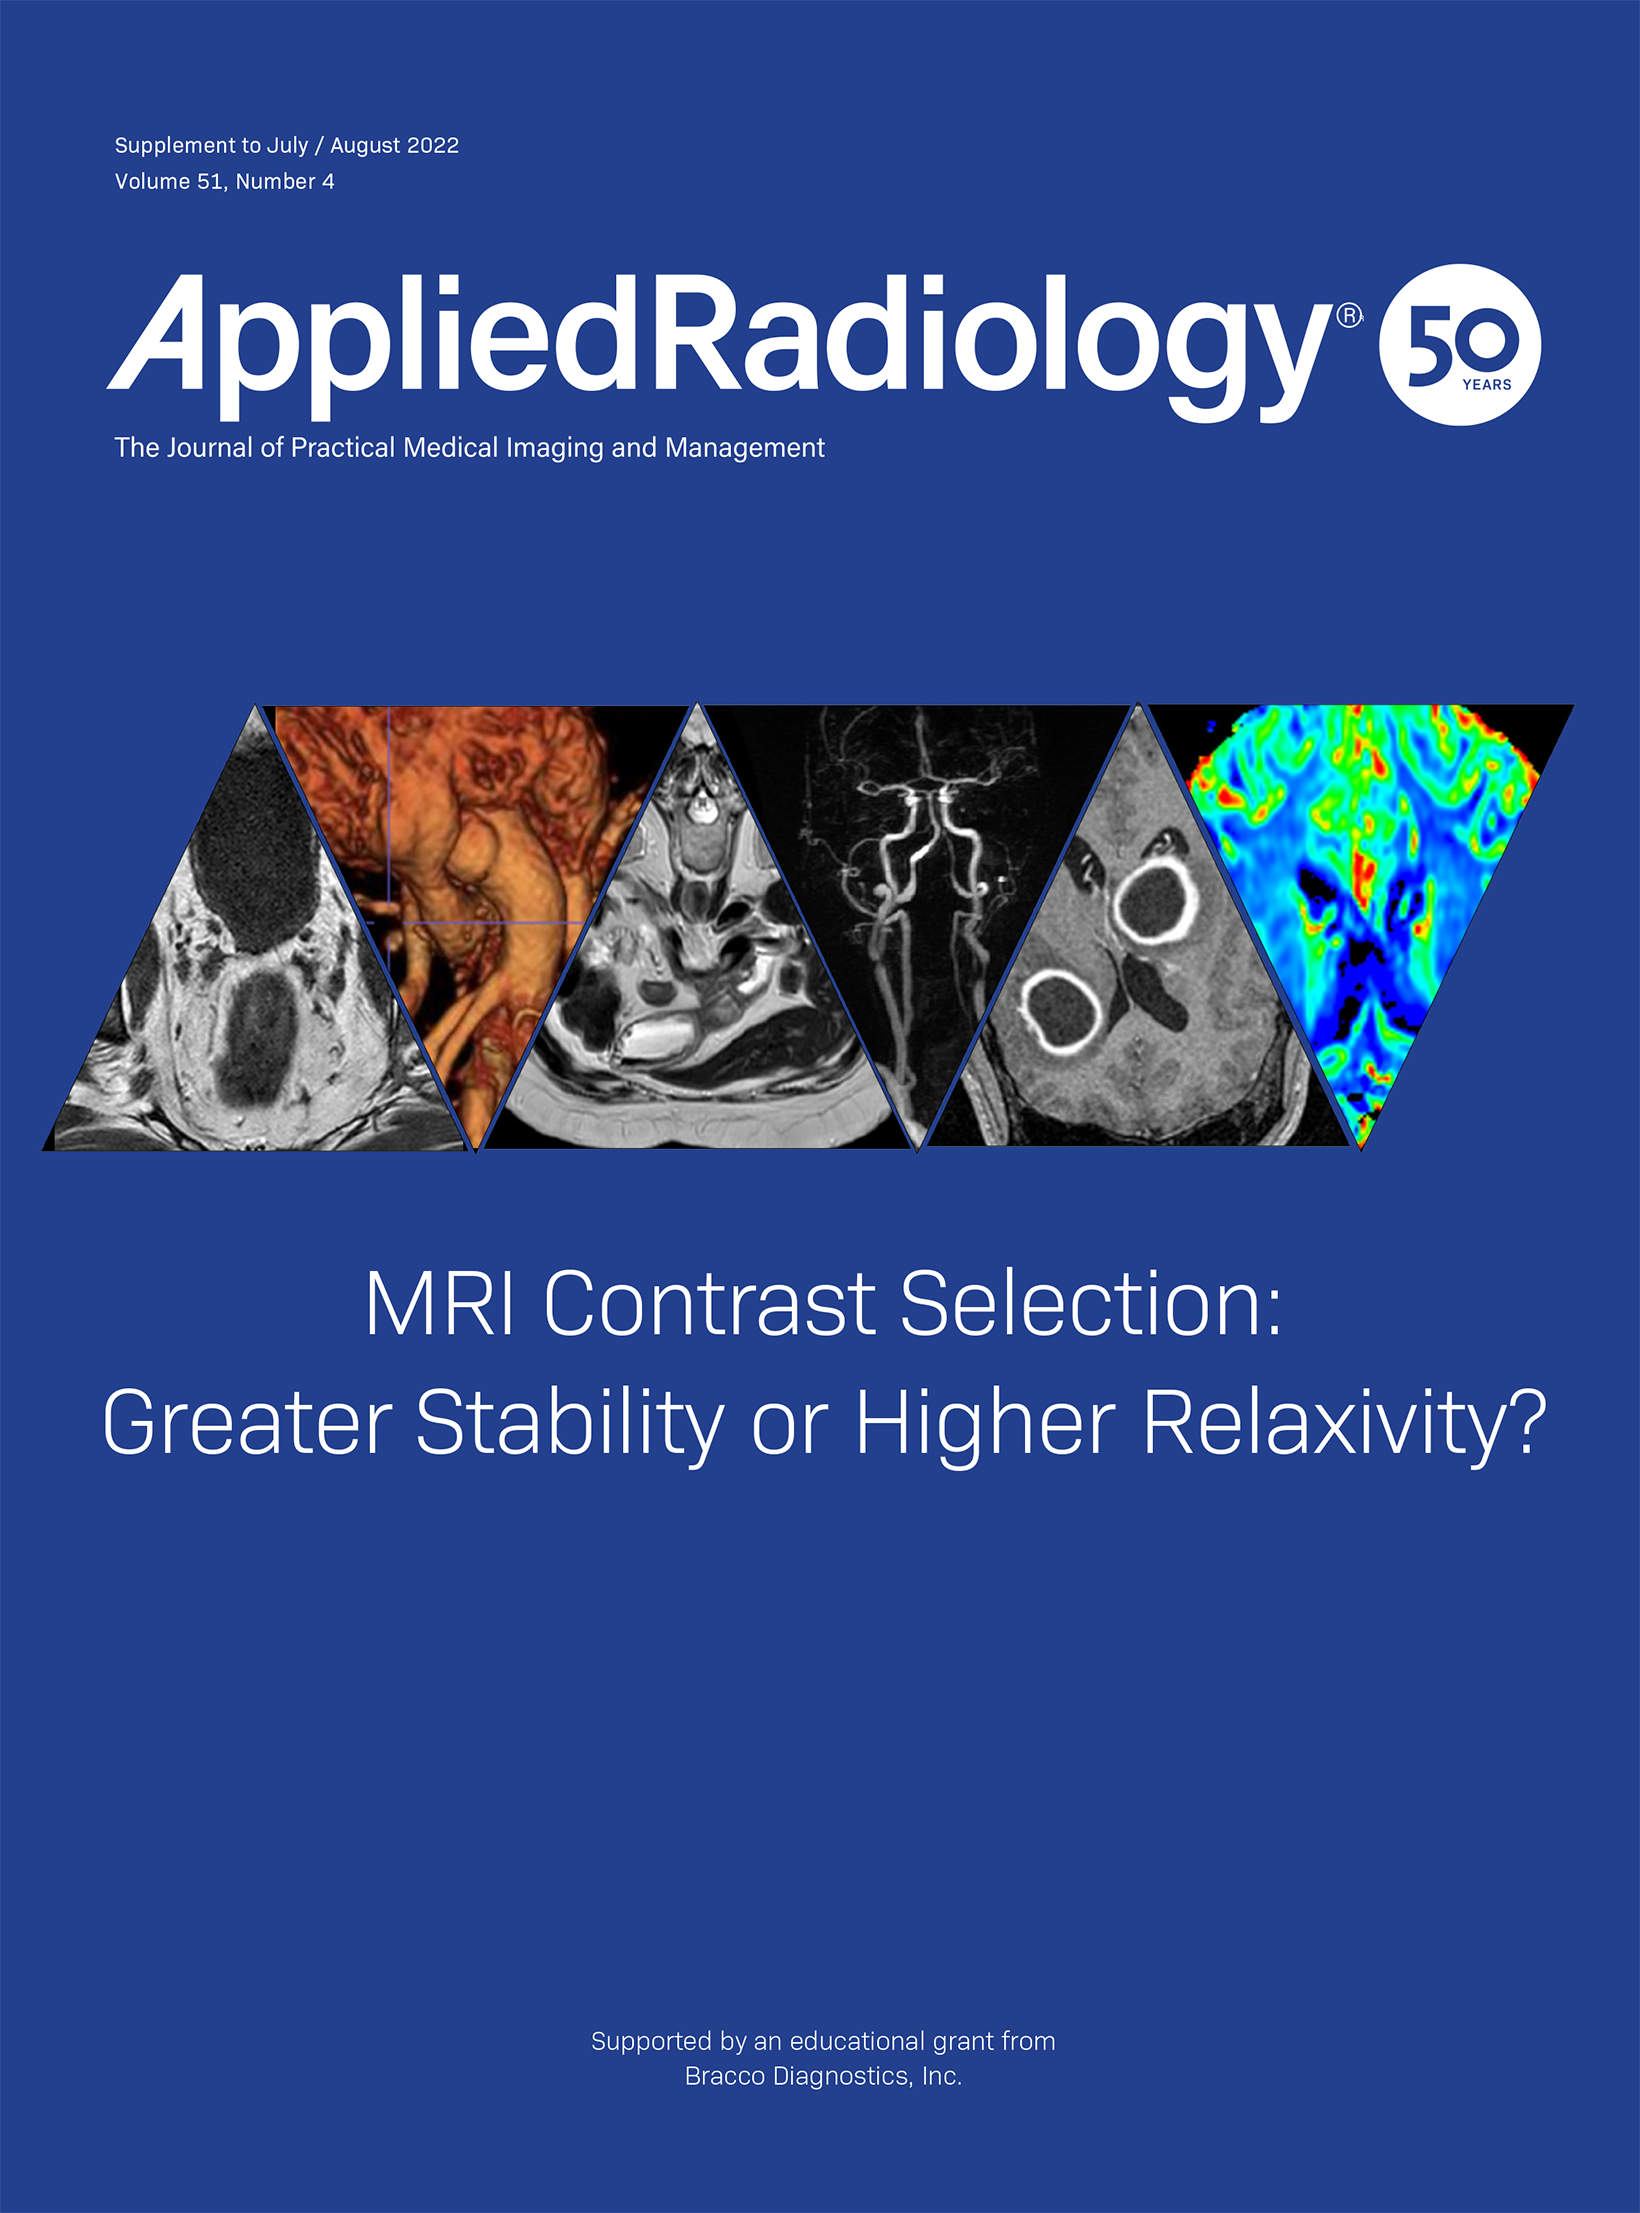 MRI Contrast Selection